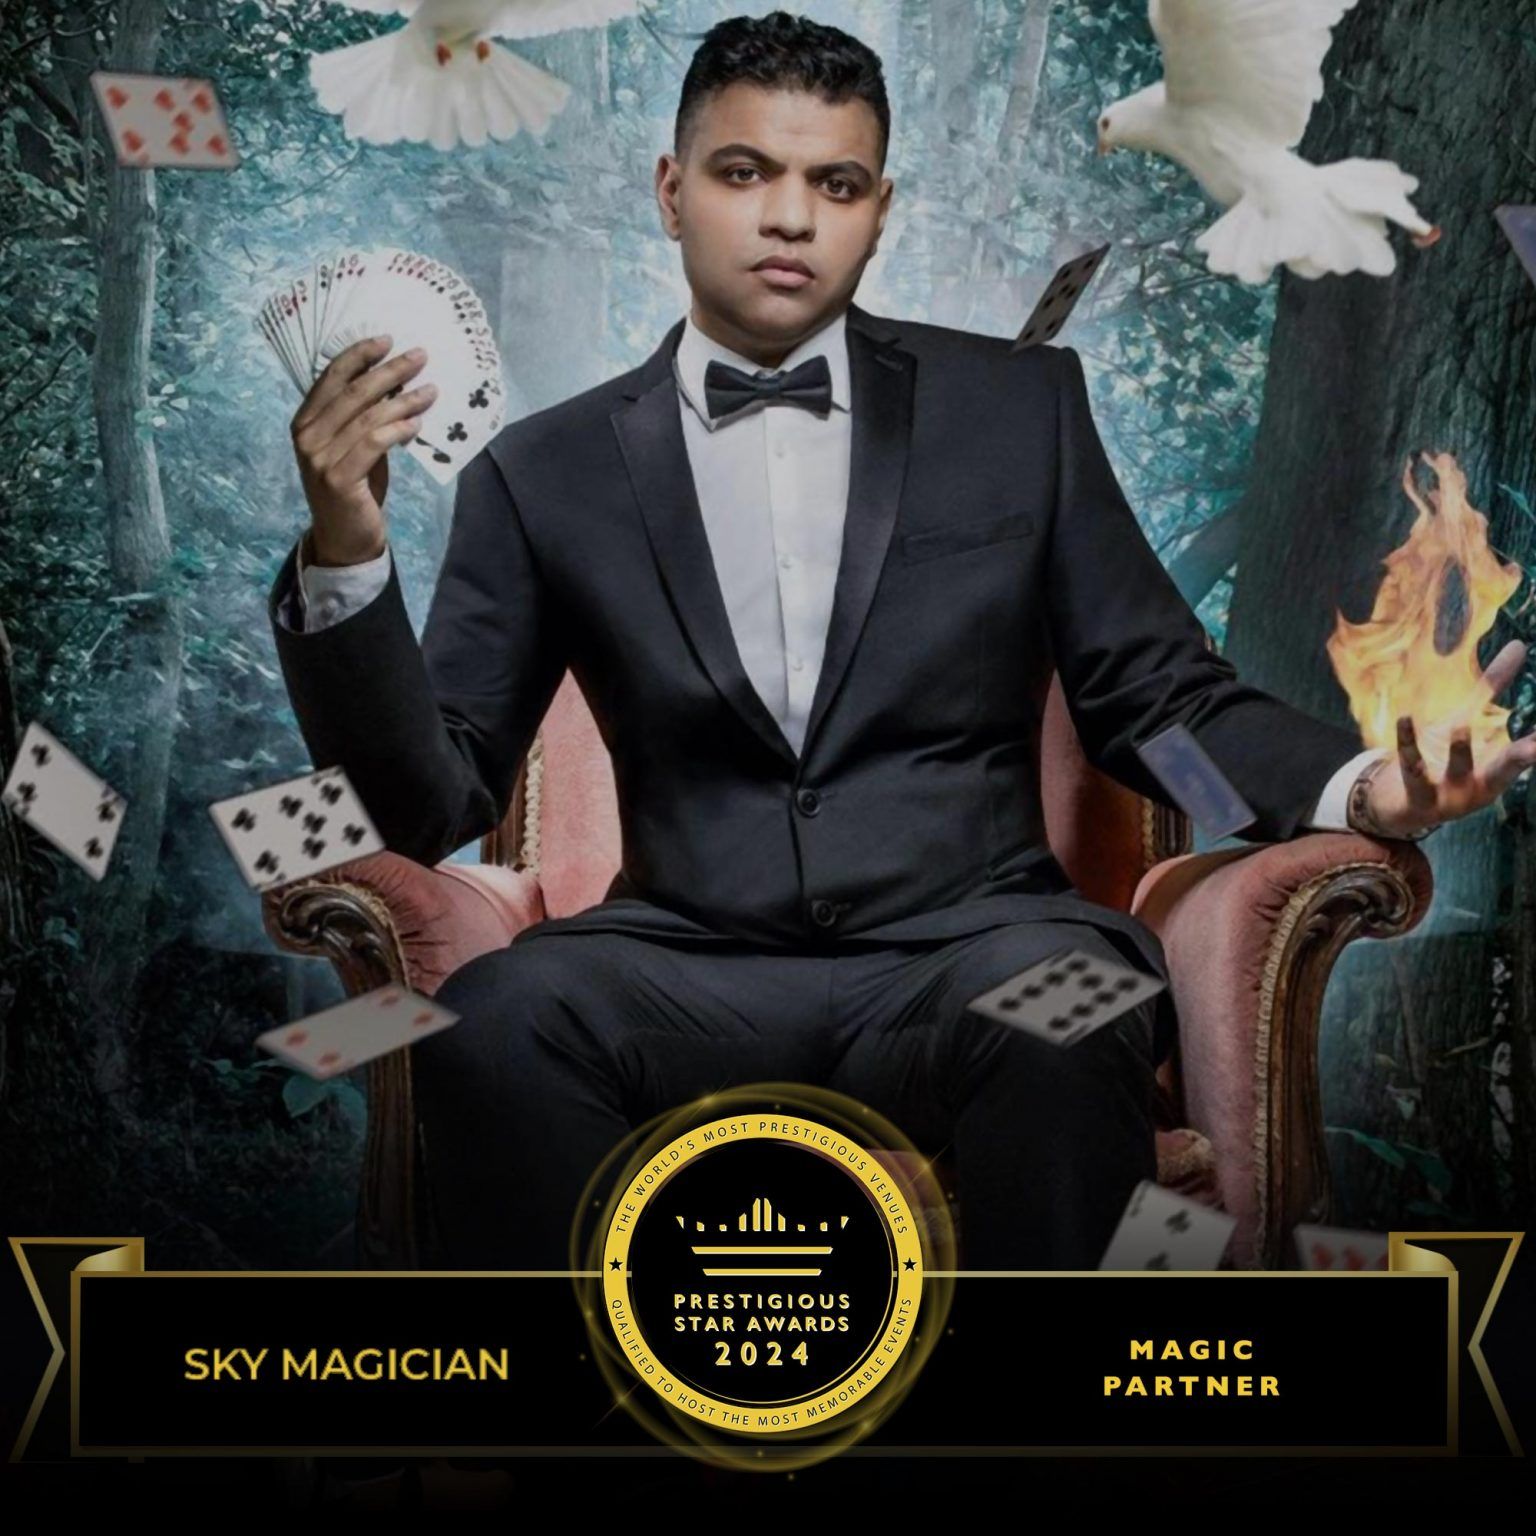 Magic Partner   Sky Magician, Prestigious Star Awards 2024